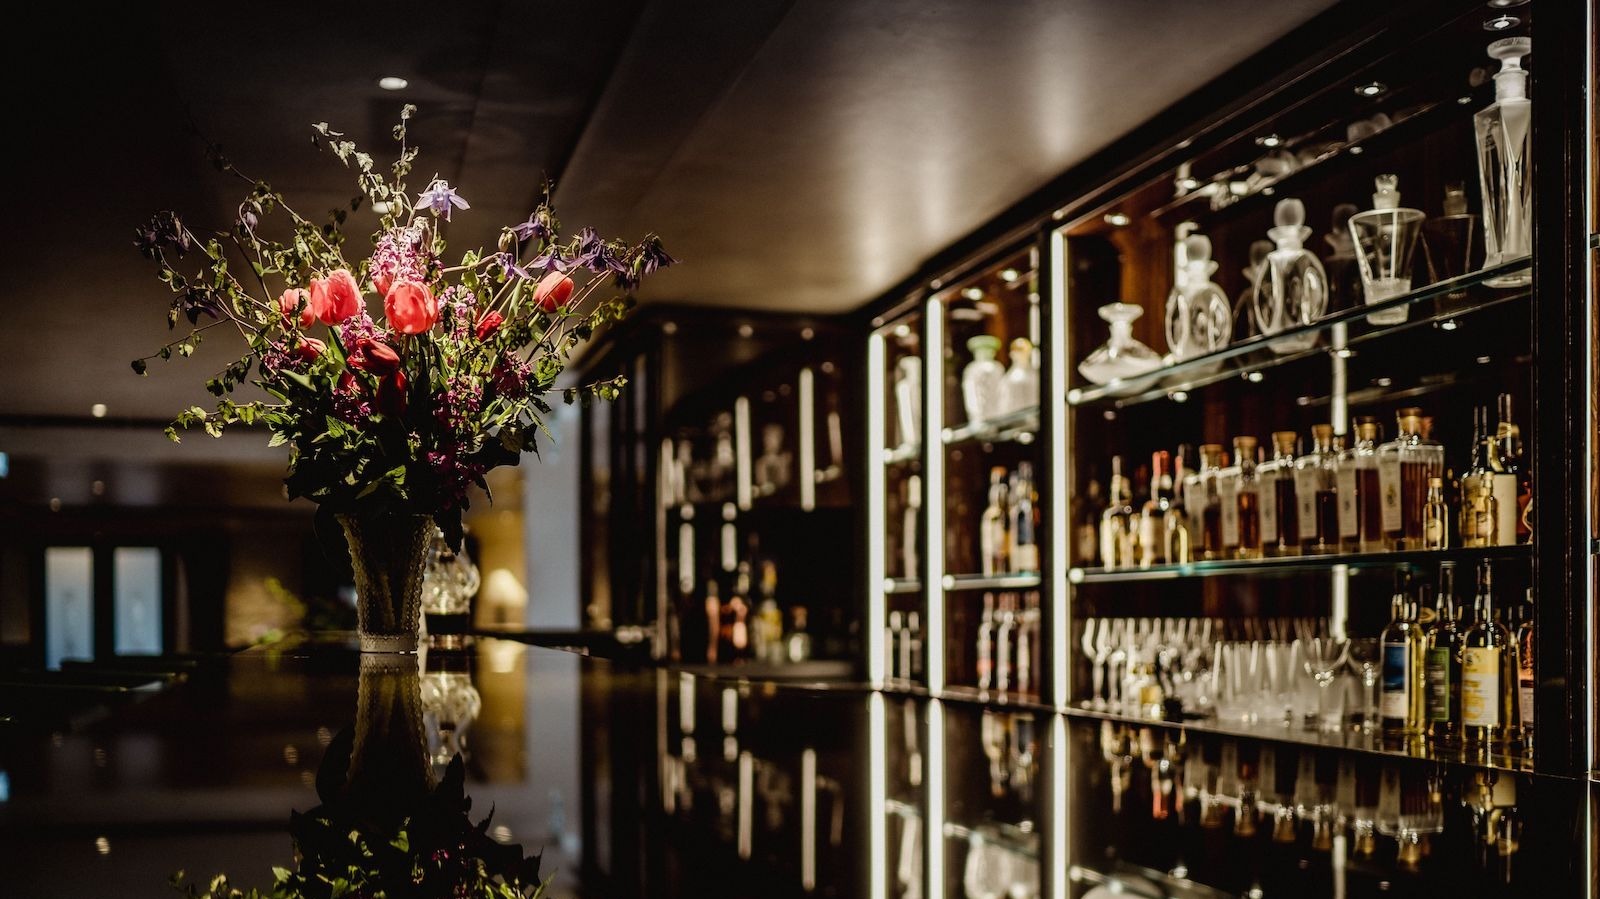 The MichelinStarred Restaurant Inside Scotland's Oldest Working Whisky